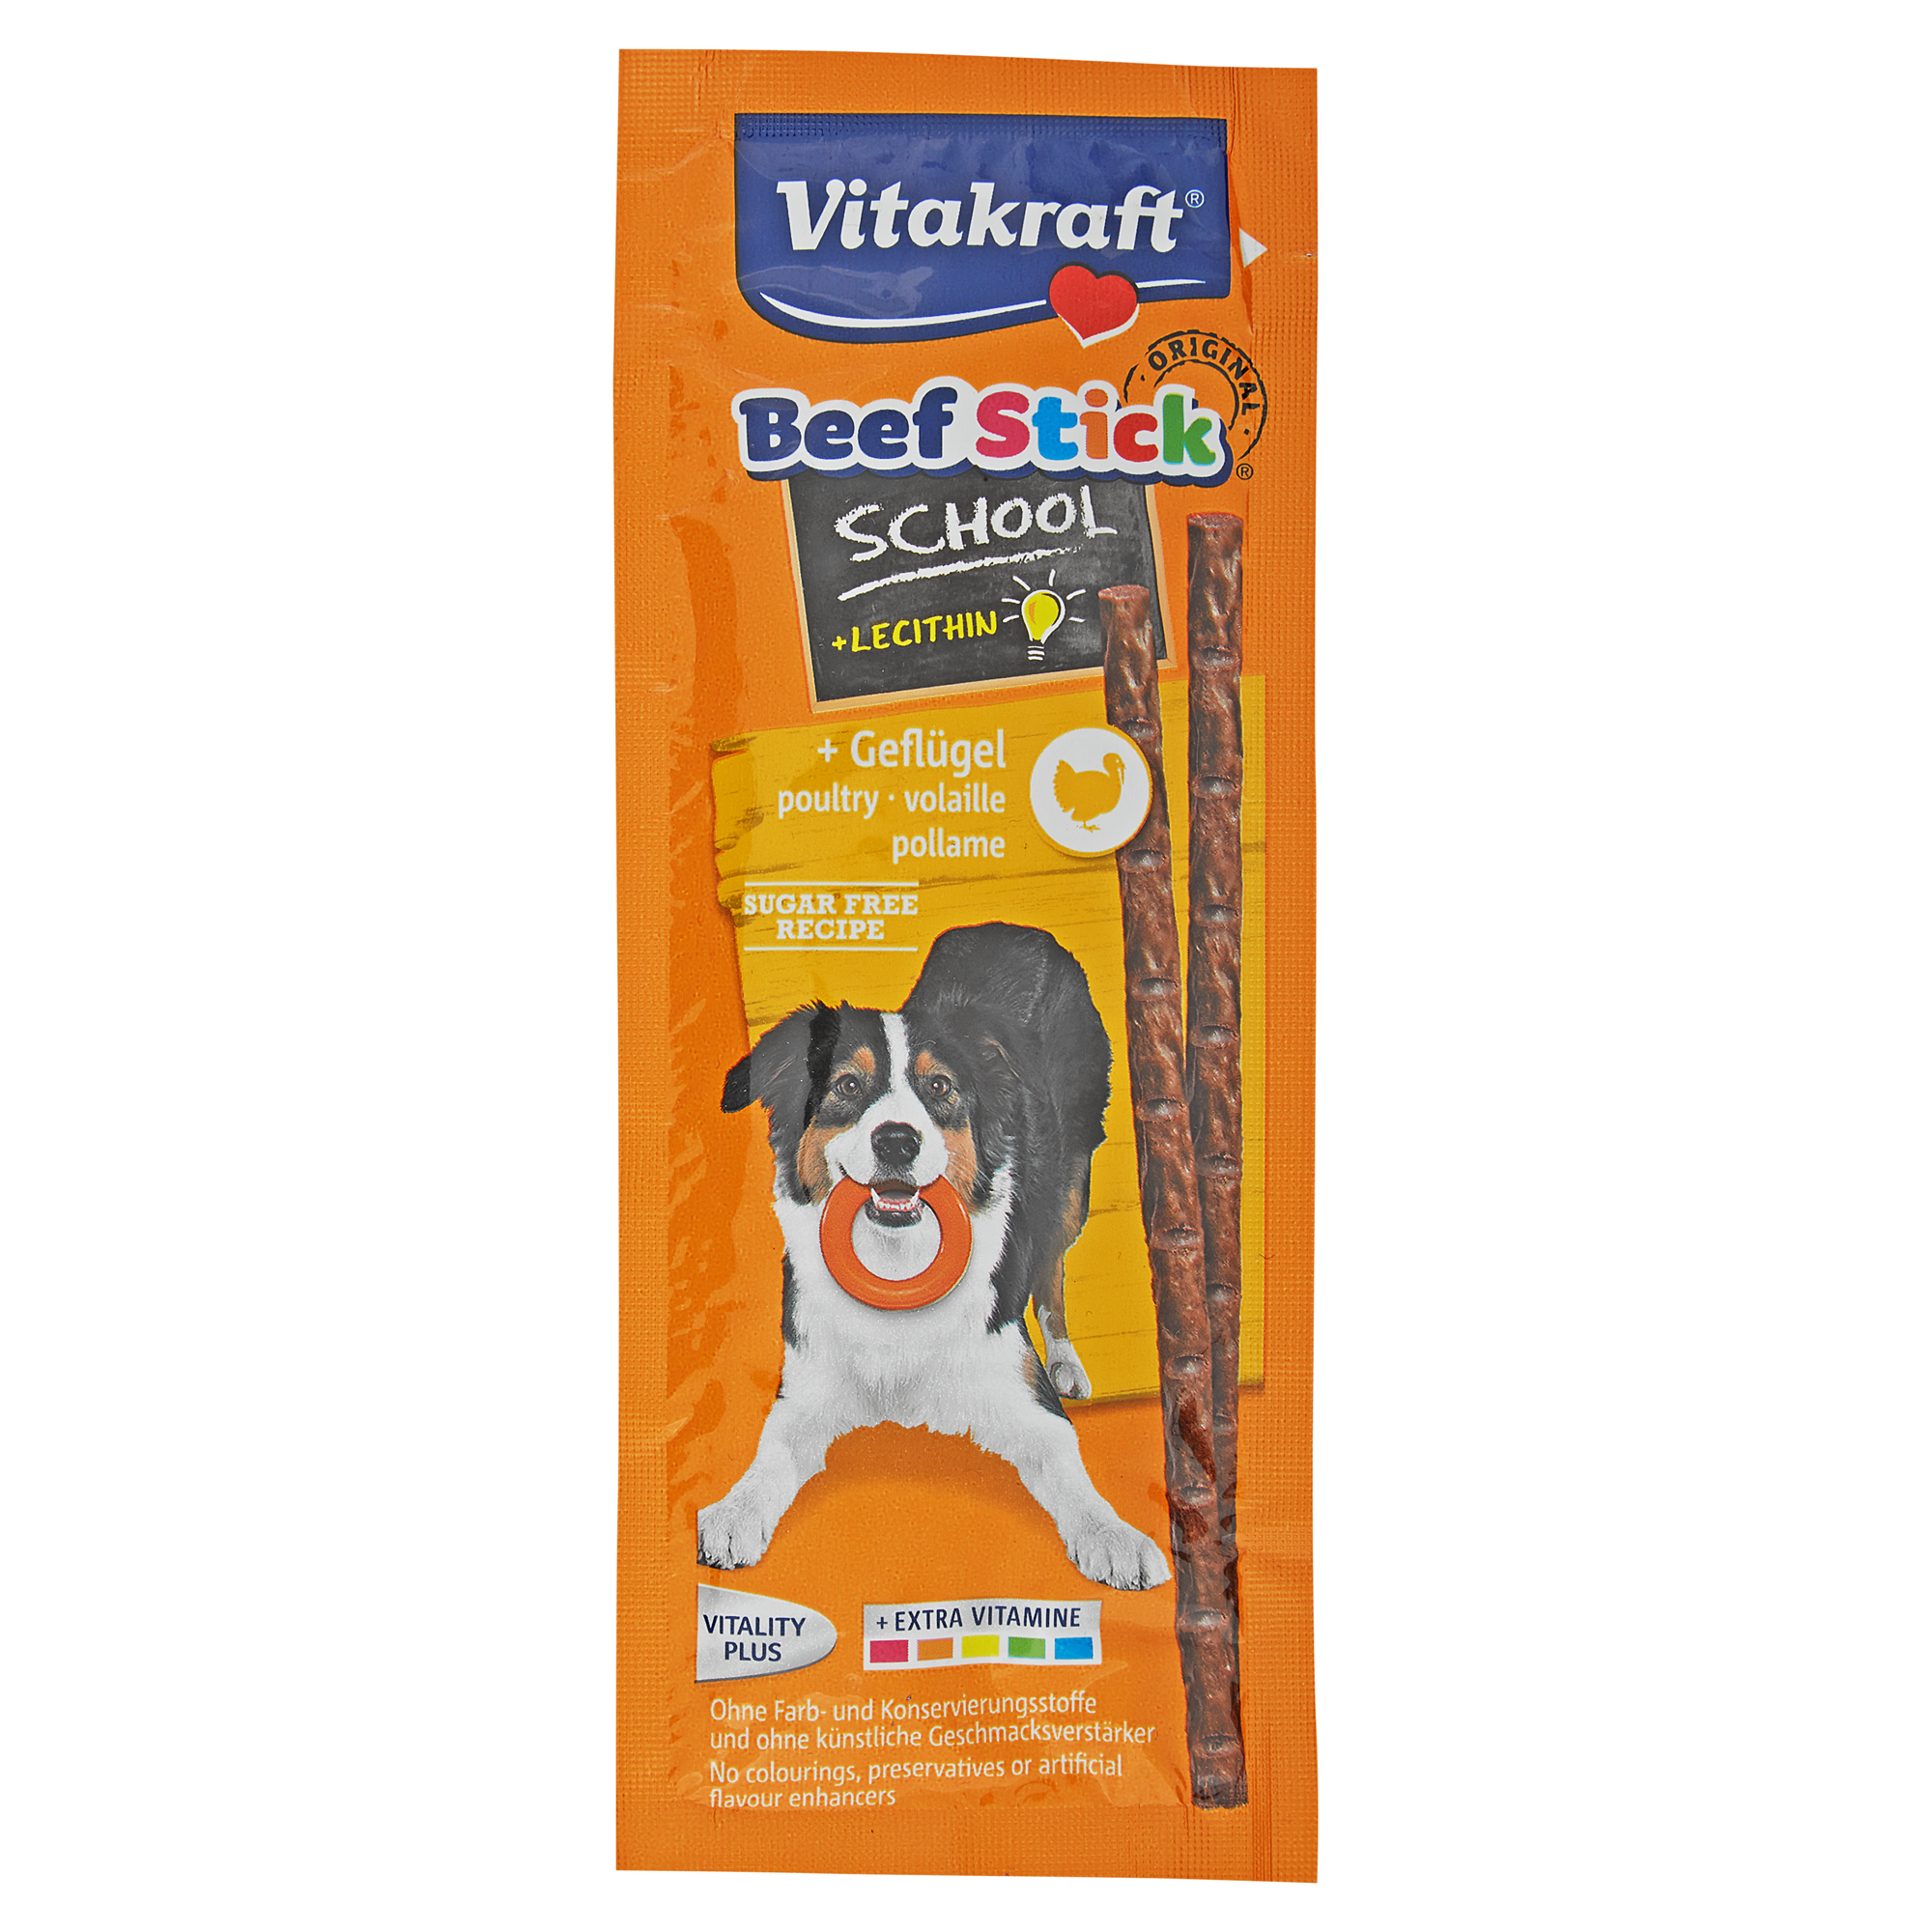 Hundesnack "Beef Stick" School mit Geflügel 10 Stück + product picture